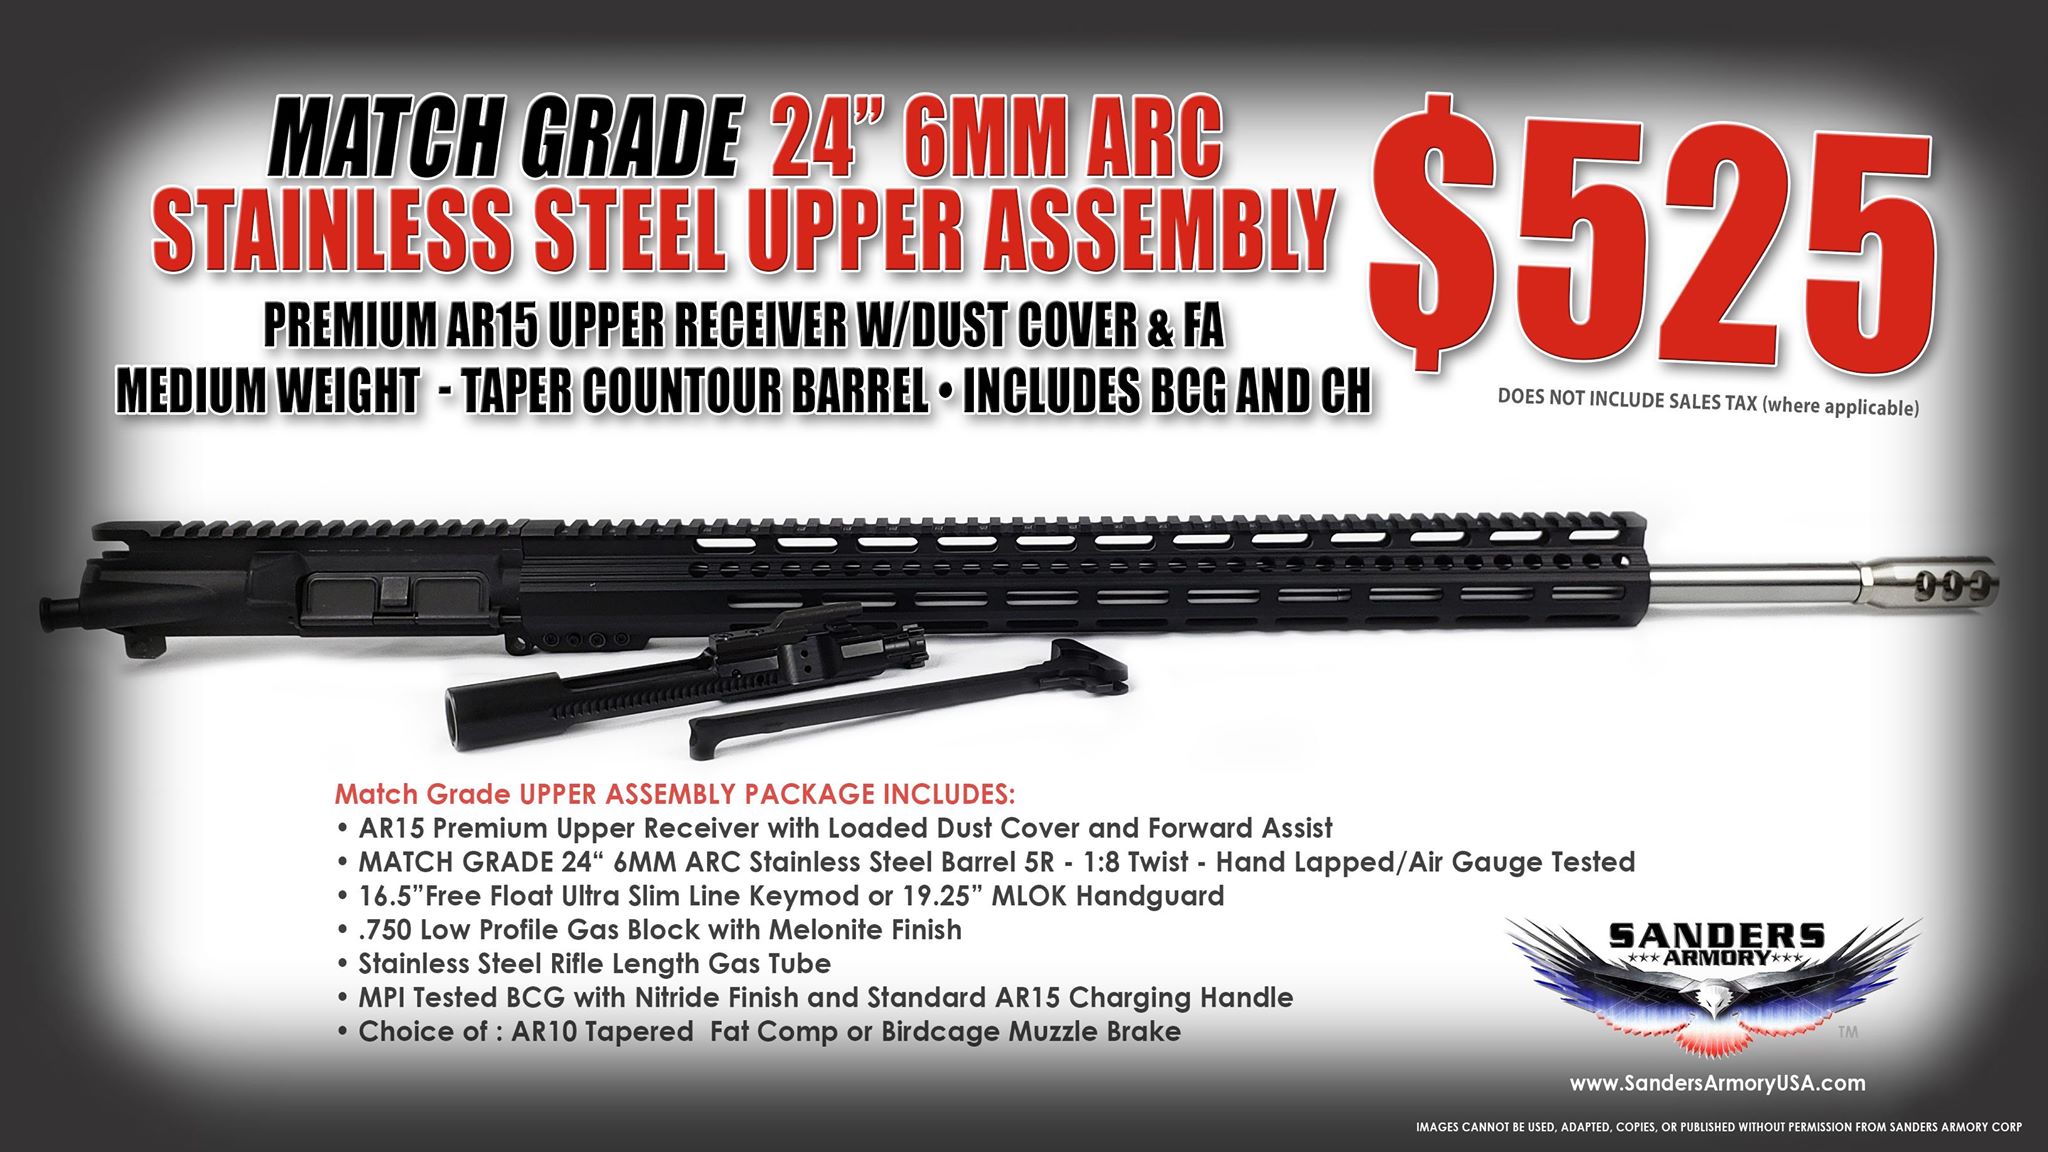 Sanders Armory 24" 6MM ARC Match Grade Upper Assembly